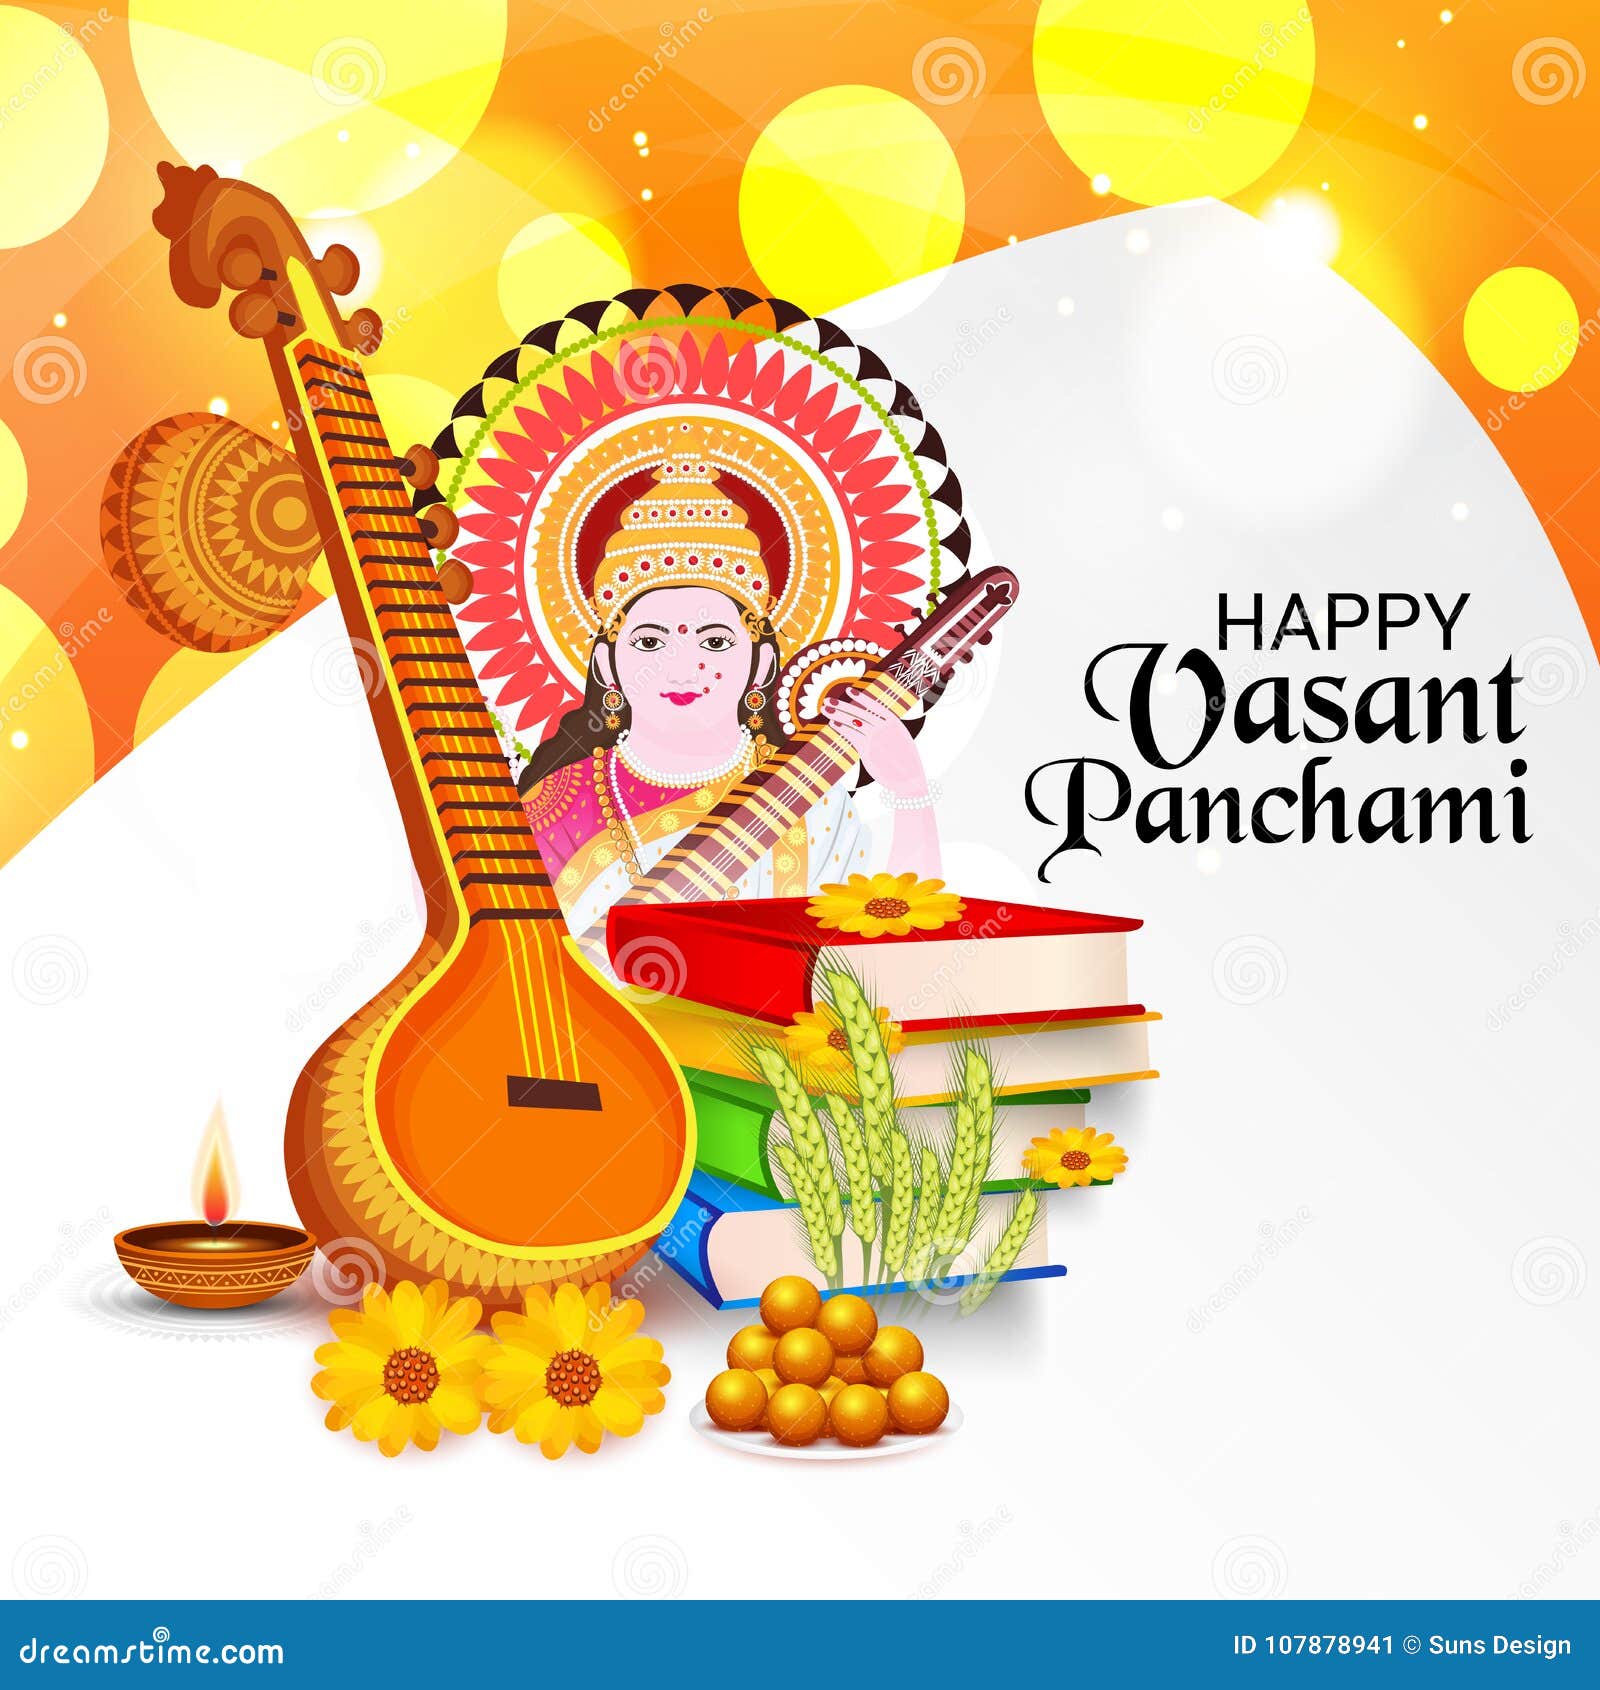 Happy Vasant Panchami Stock Illustration Illustration Of Celebration 107878941 